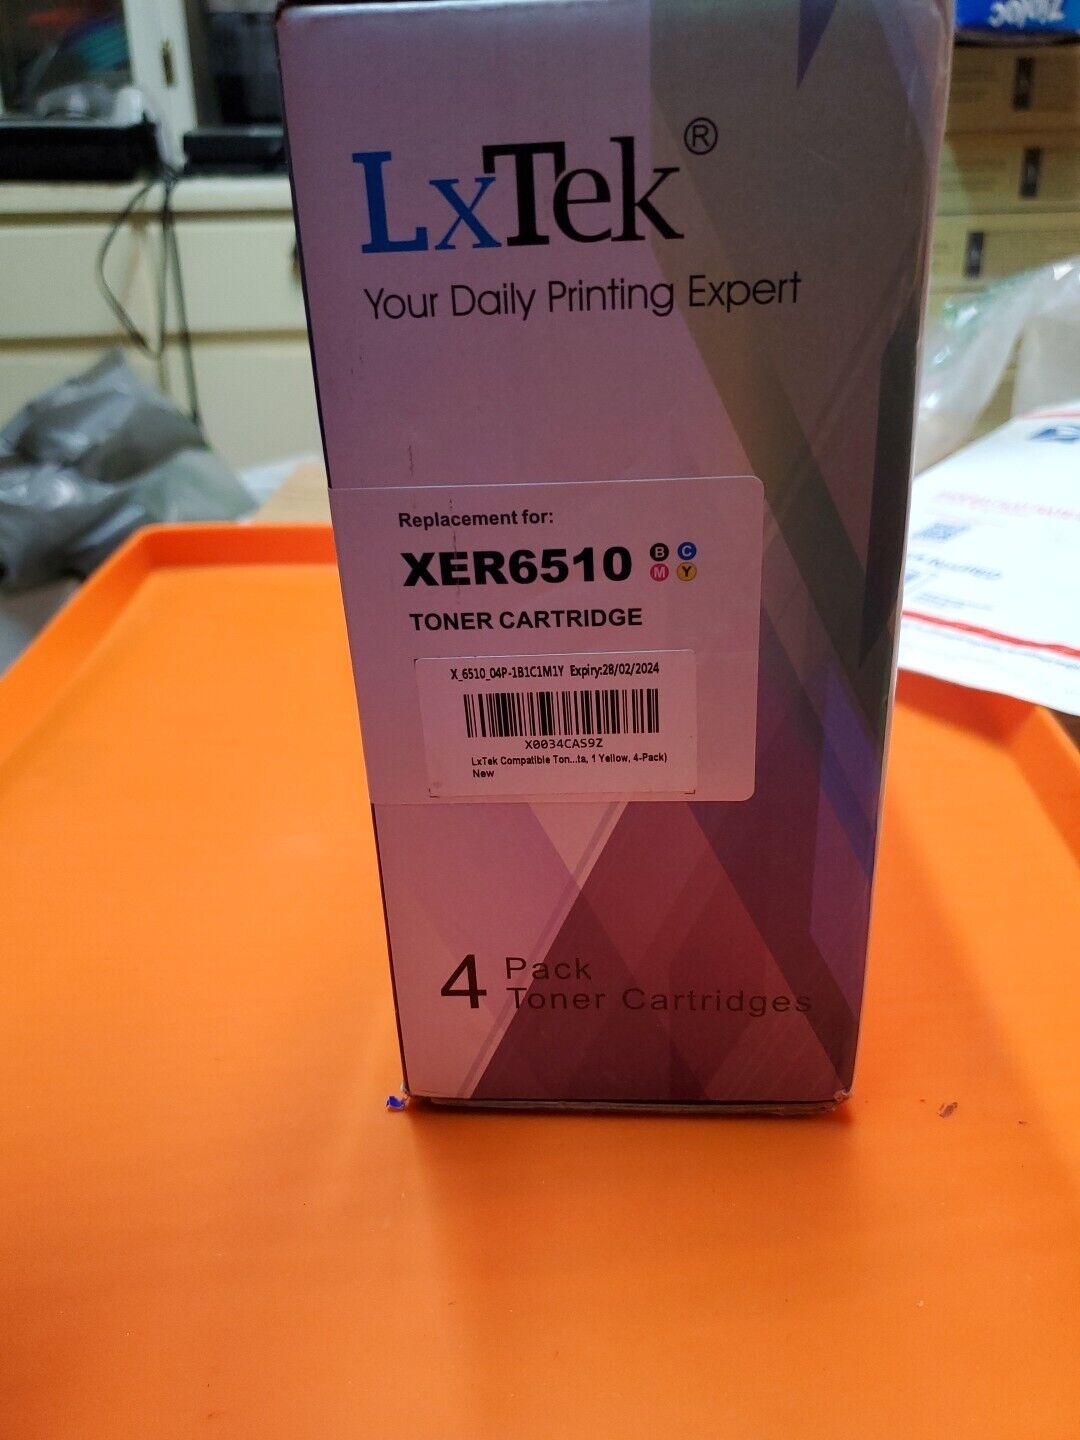 LxTek toner cartridge XER6510